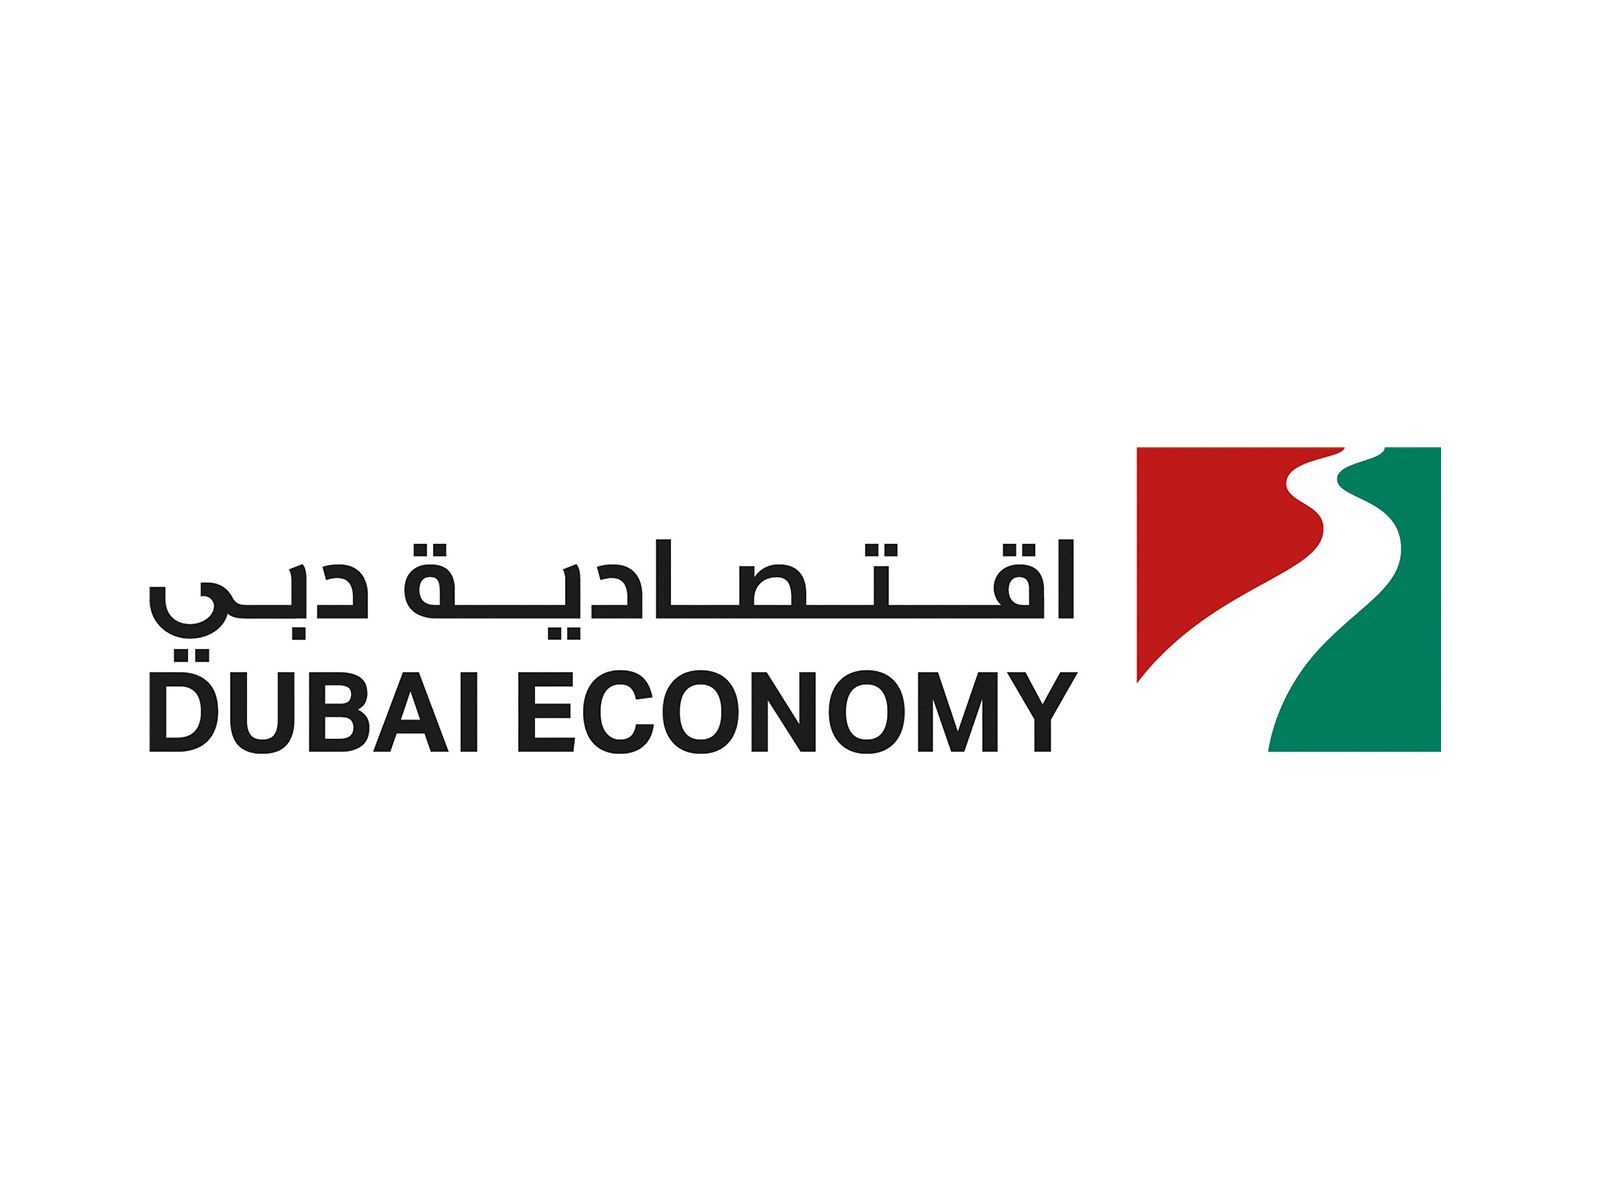 dubai economy and tourism in arabic